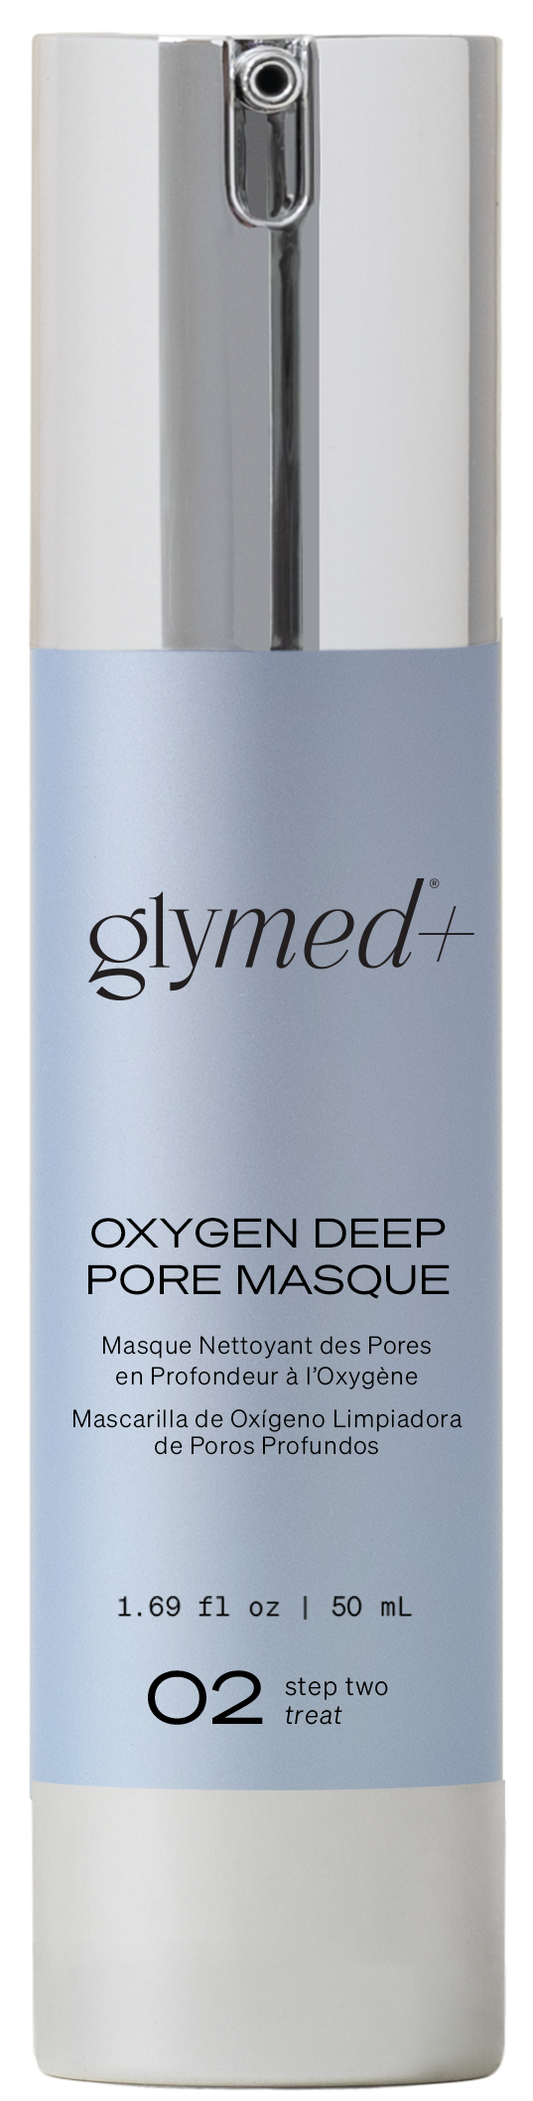 Oxygen Deep Pore Masque